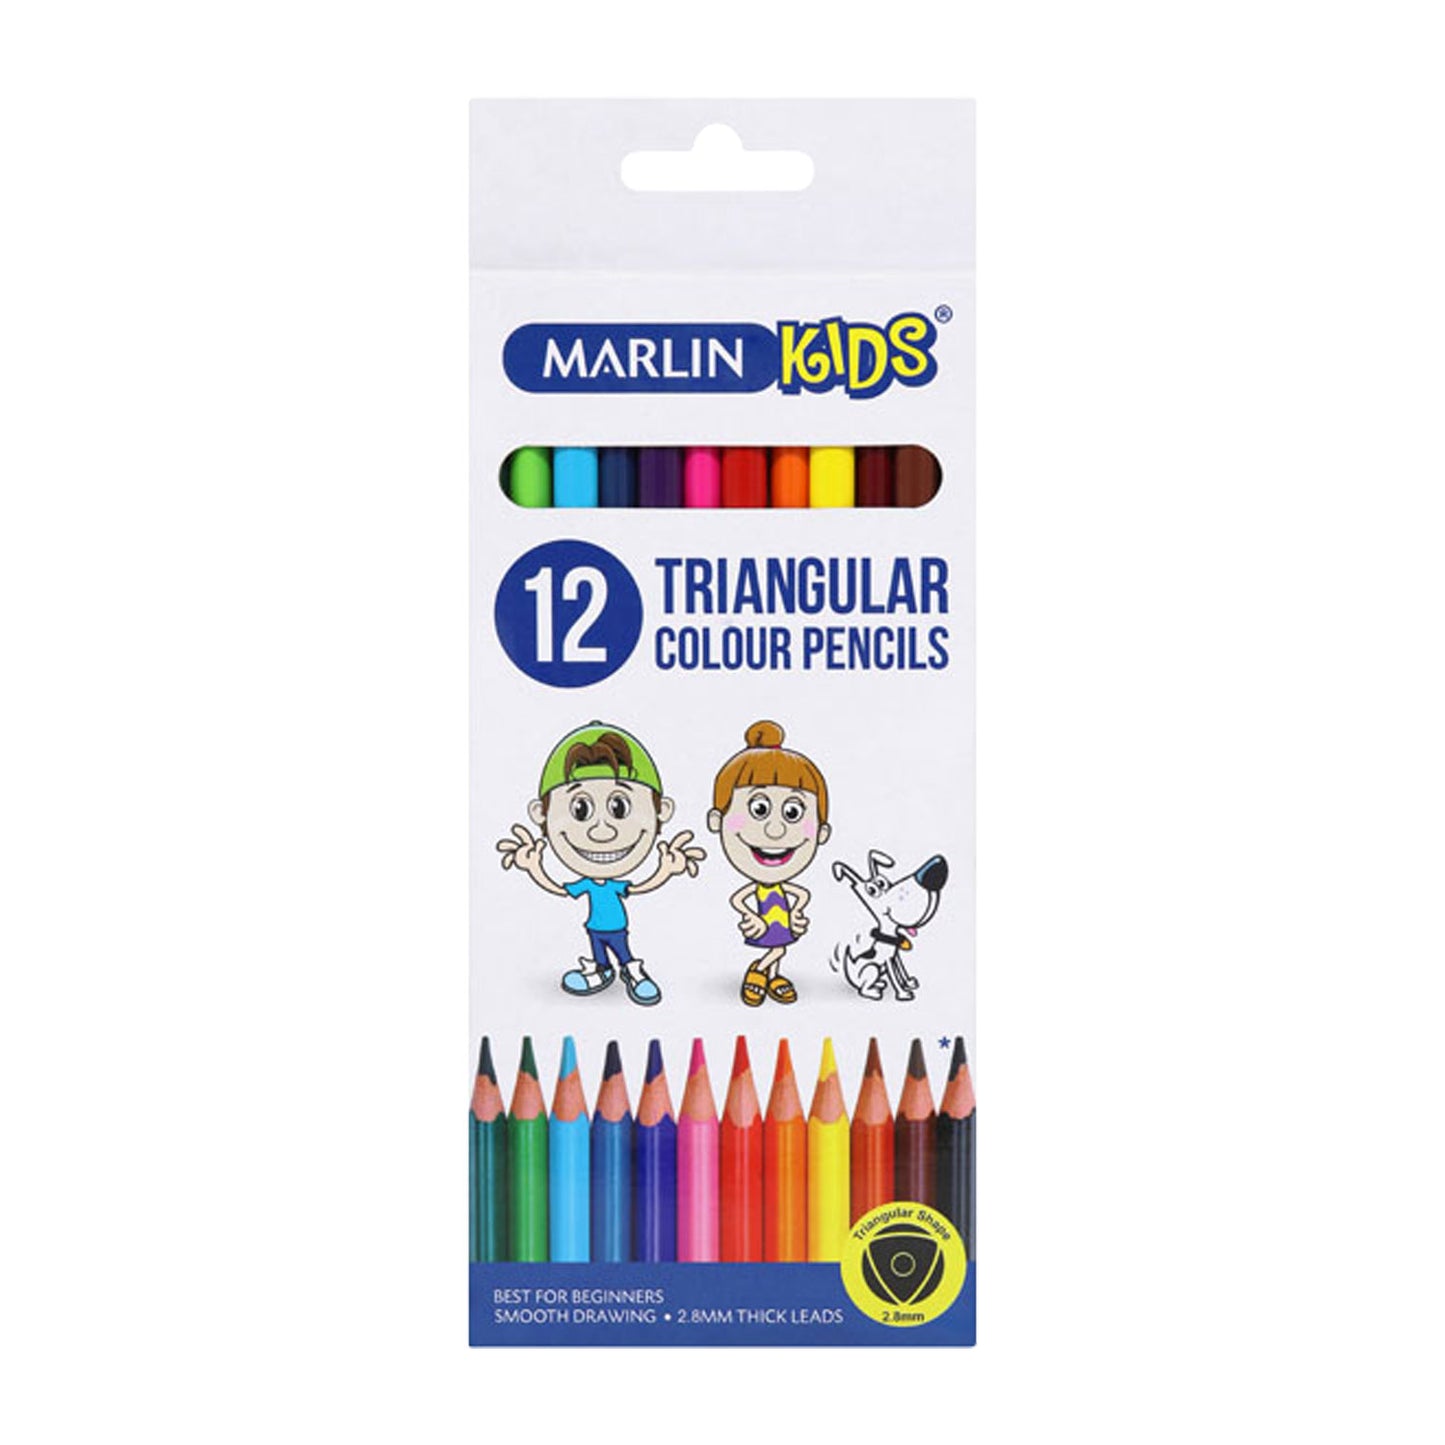 Marlin Kids Triangular Colour Pencils, Long (12 Pencils per pack, 12 Packs)